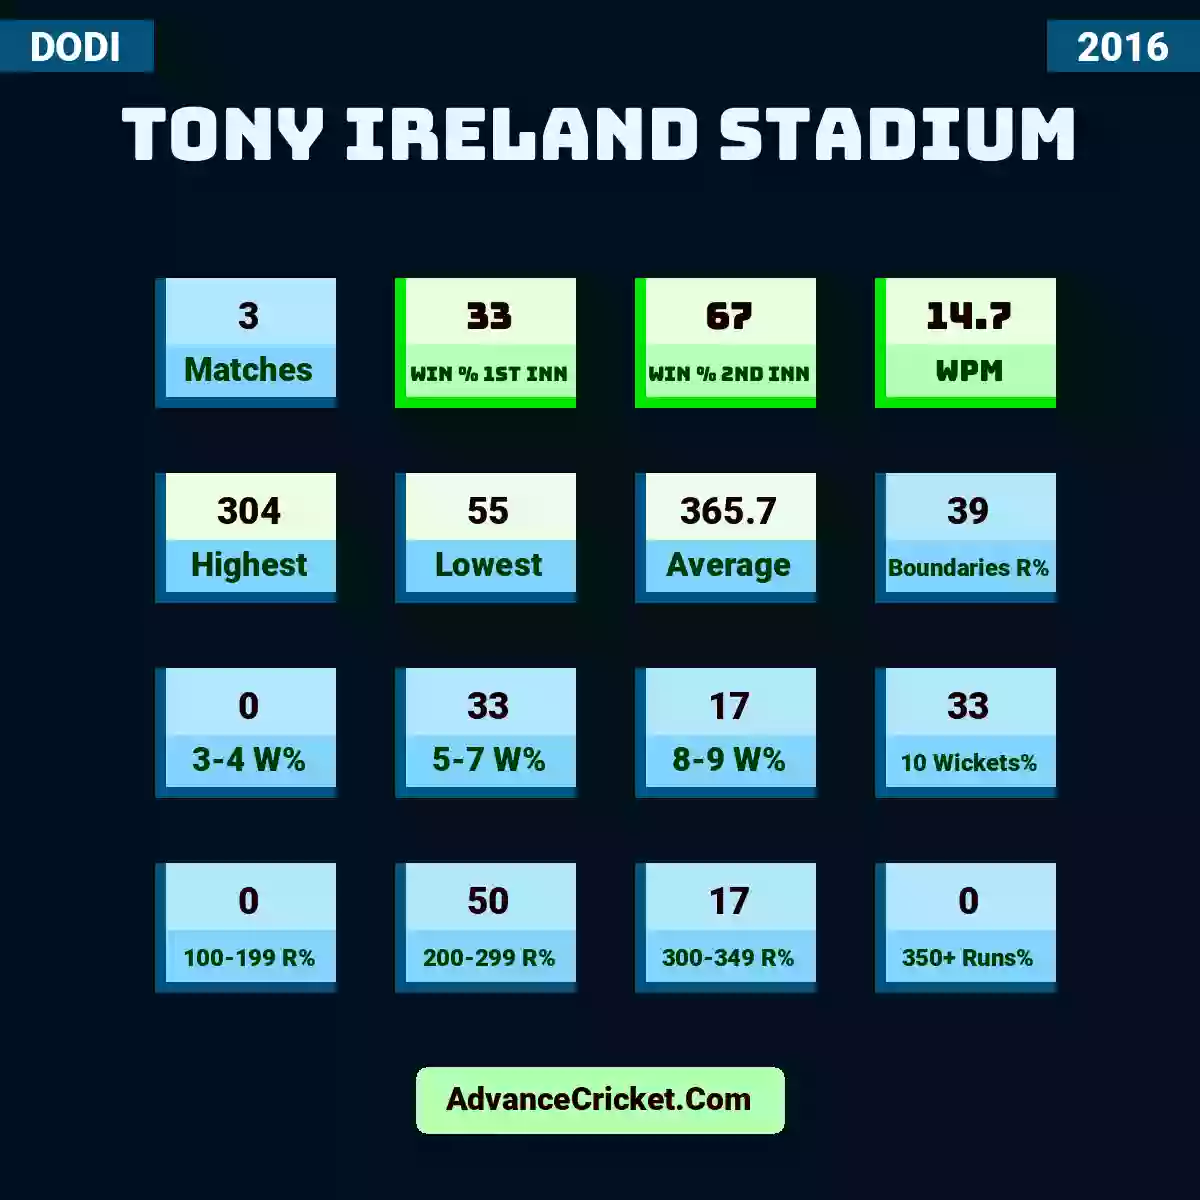 Image showing Tony Ireland Stadium with Matches: 3, Win % 1st Inn: 33, Win % 2nd Inn: 67, WPM: 14.7, Highest: 304, Lowest: 55, Average: 365.7, Boundaries R%: 39, 3-4 W%: 0, 5-7 W%: 33, 8-9 W%: 17, 10 Wickets%: 33, 100-199 R%: 0, 200-299 R%: 50, 300-349 R%: 17, 350+ Runs%: 0.